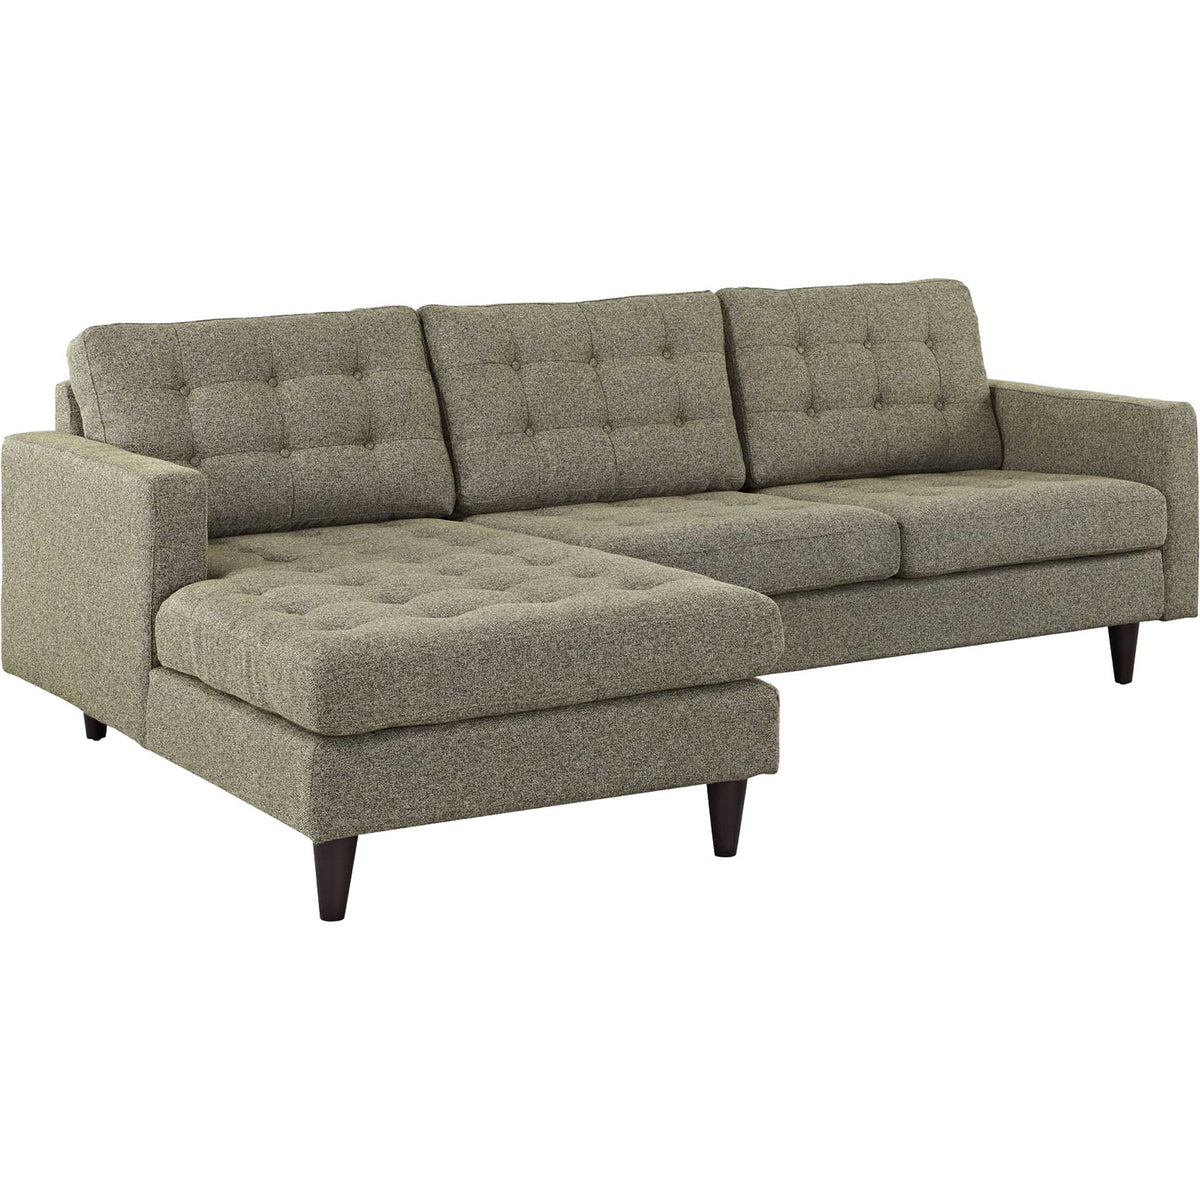 Era Upholstered Sectional Sofa Oatmeal